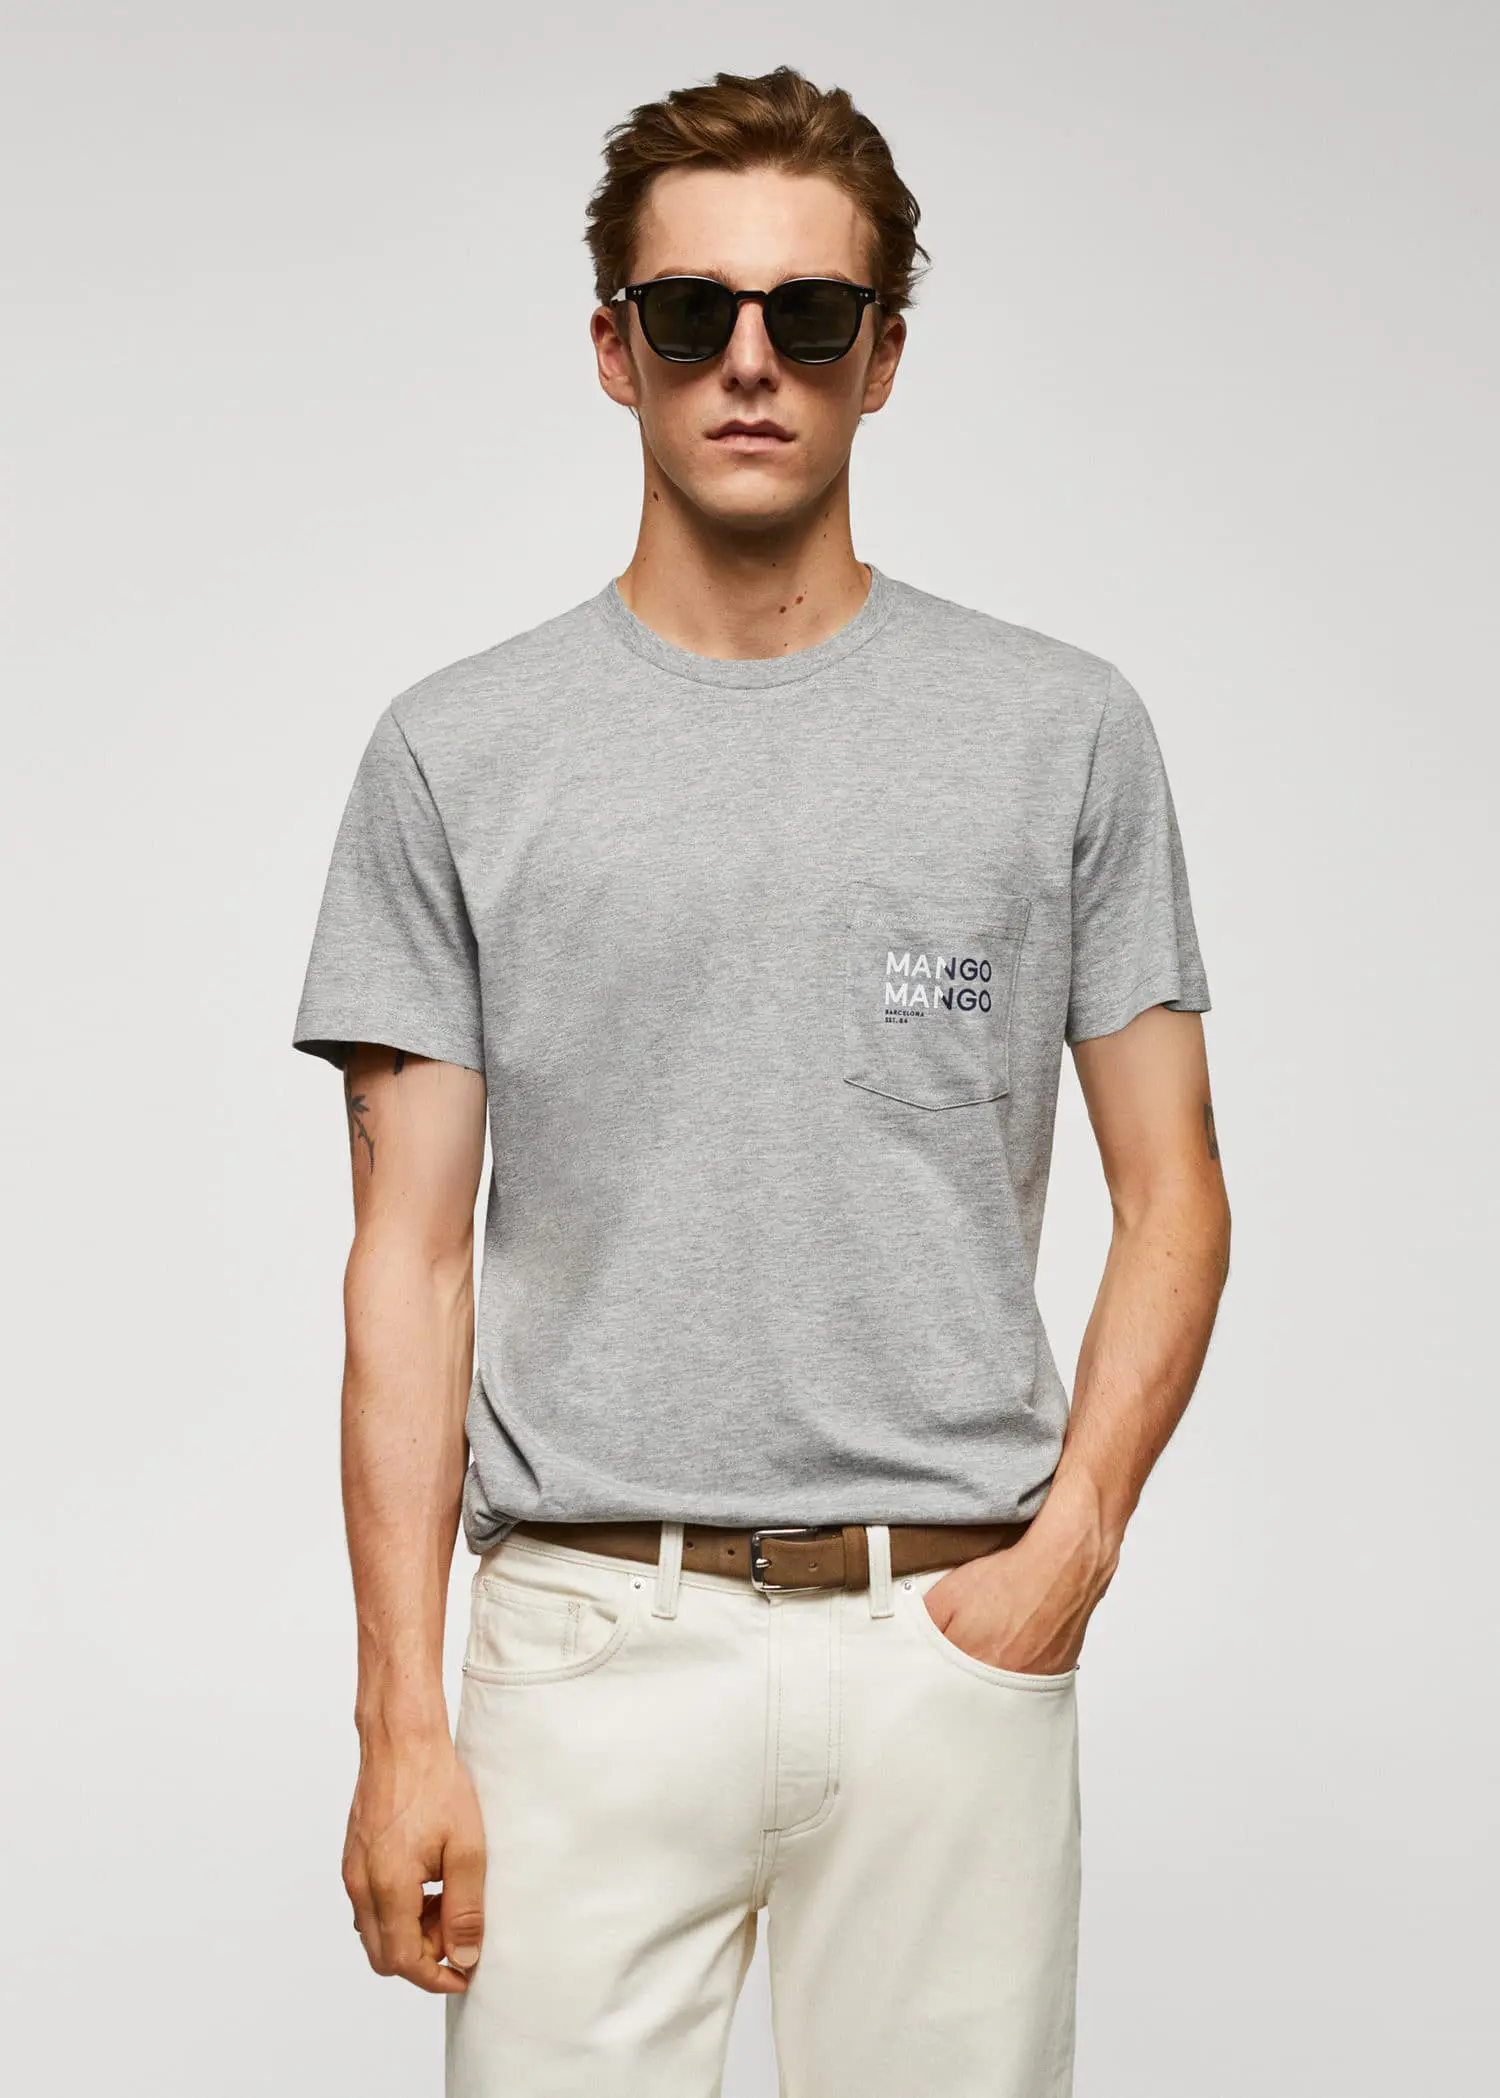 Mango Logo print cotton t-shirt. a young man wearing sunglasses and a gray t-shirt. 